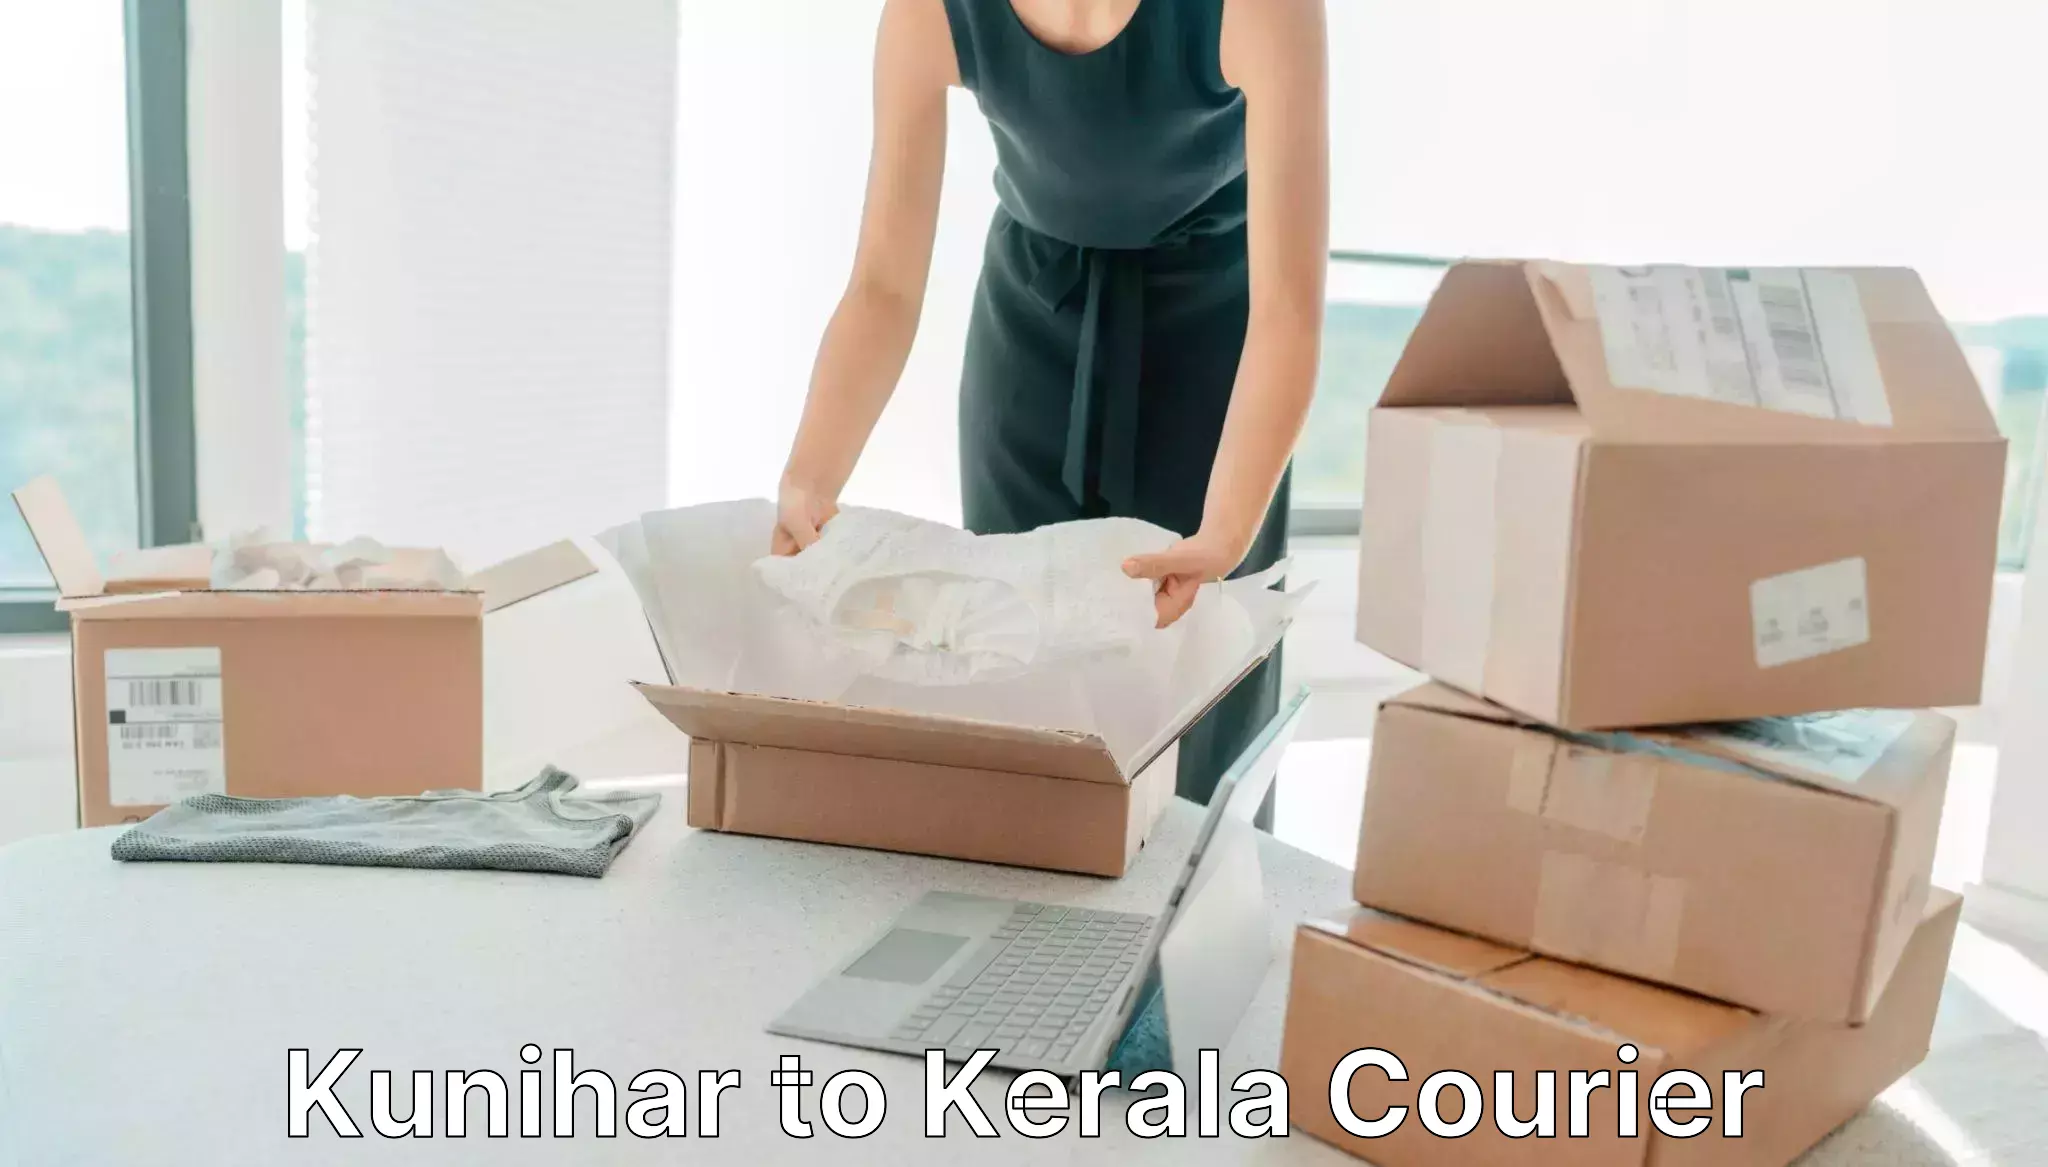 Advanced delivery network Kunihar to Kerala